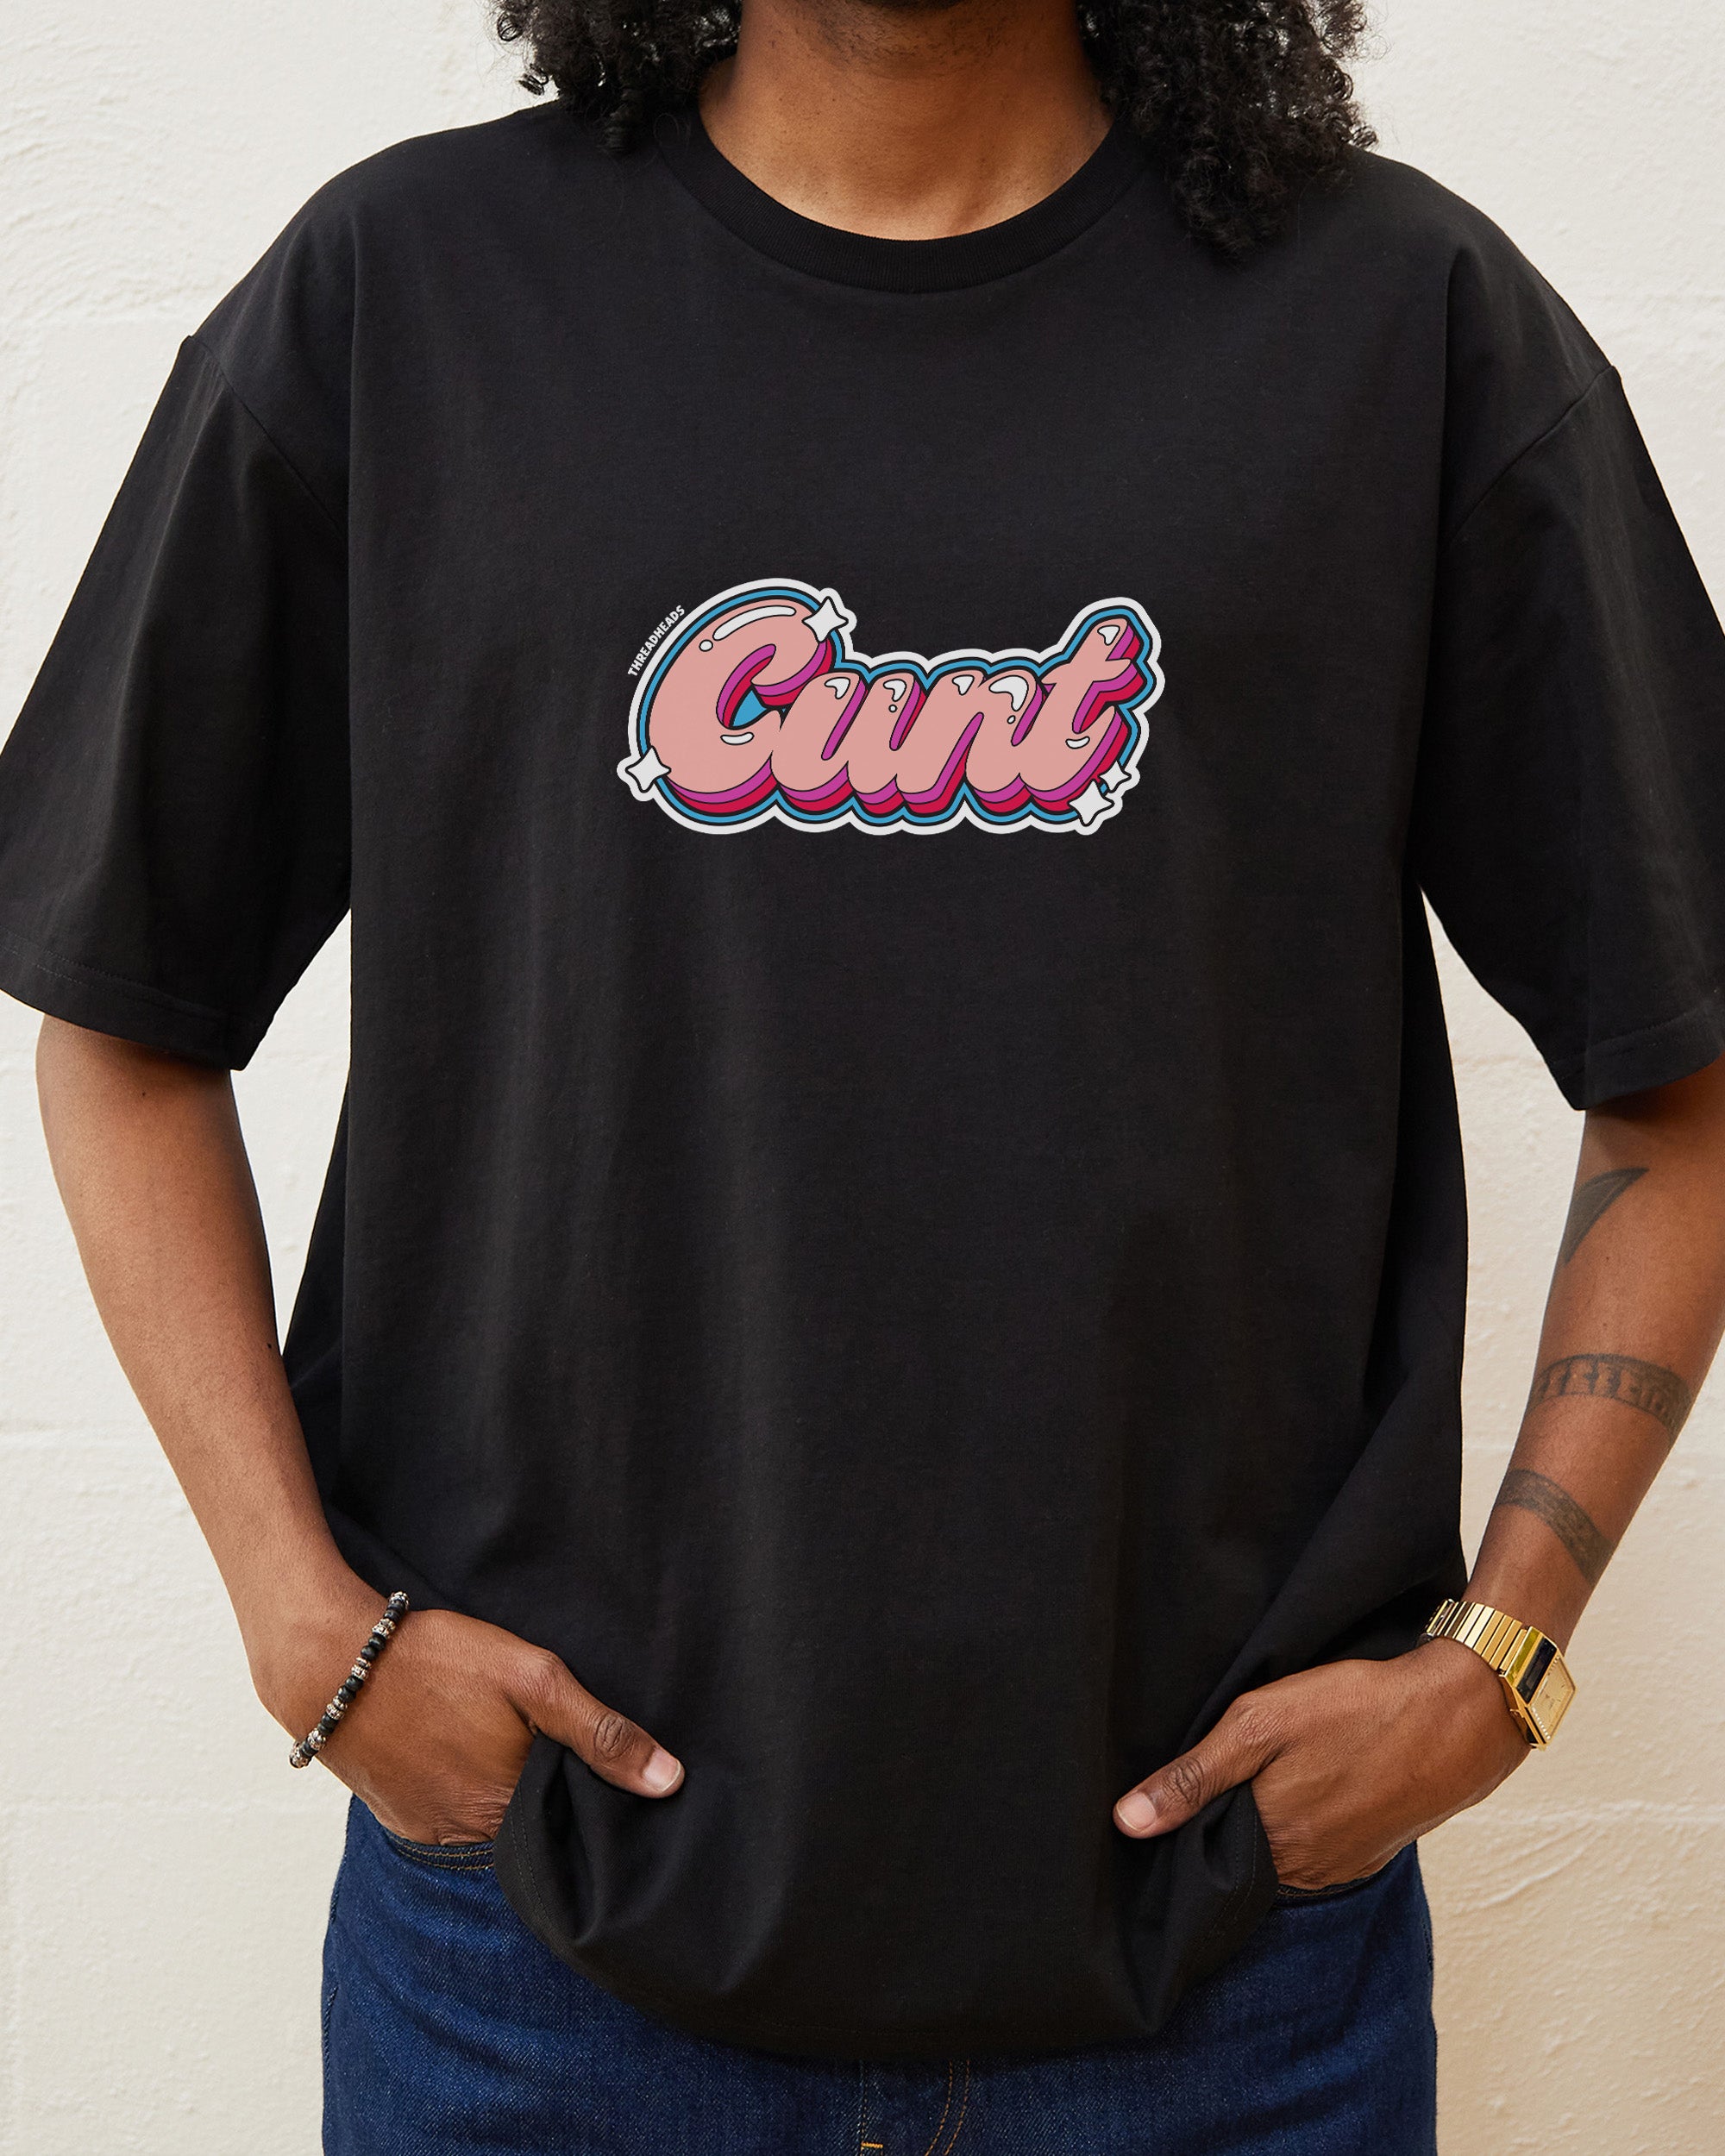 Cunt T-Shirt